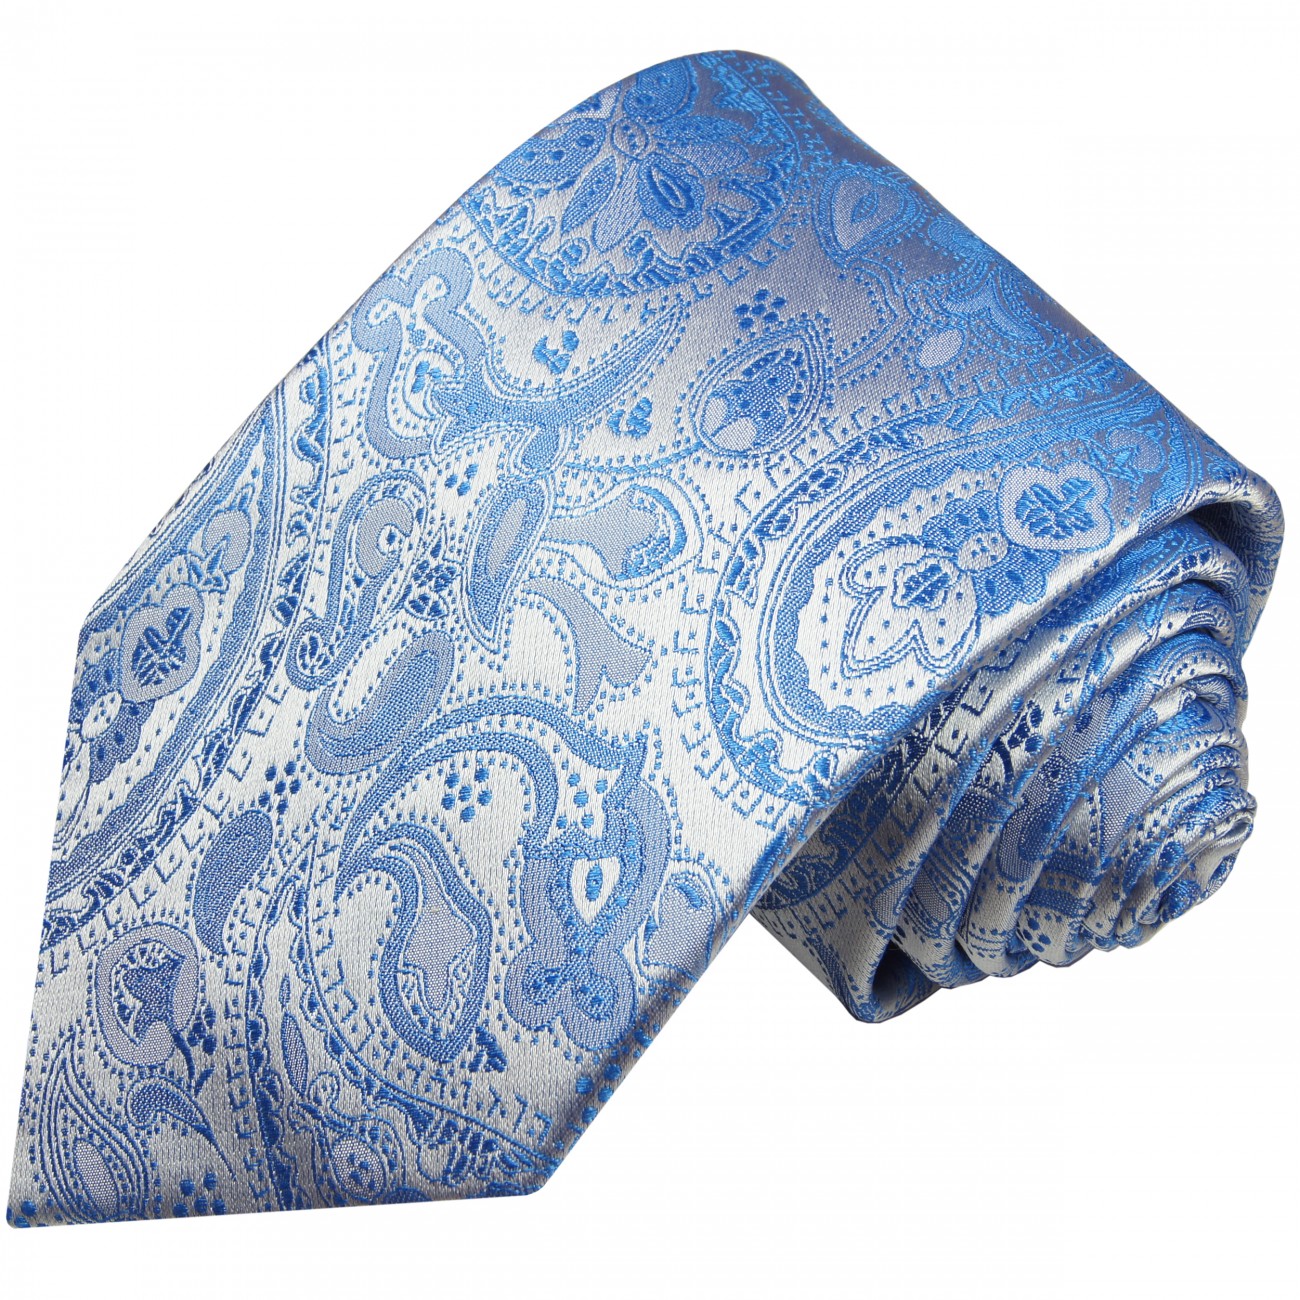 Krawatte blau silber paisley brokat 428